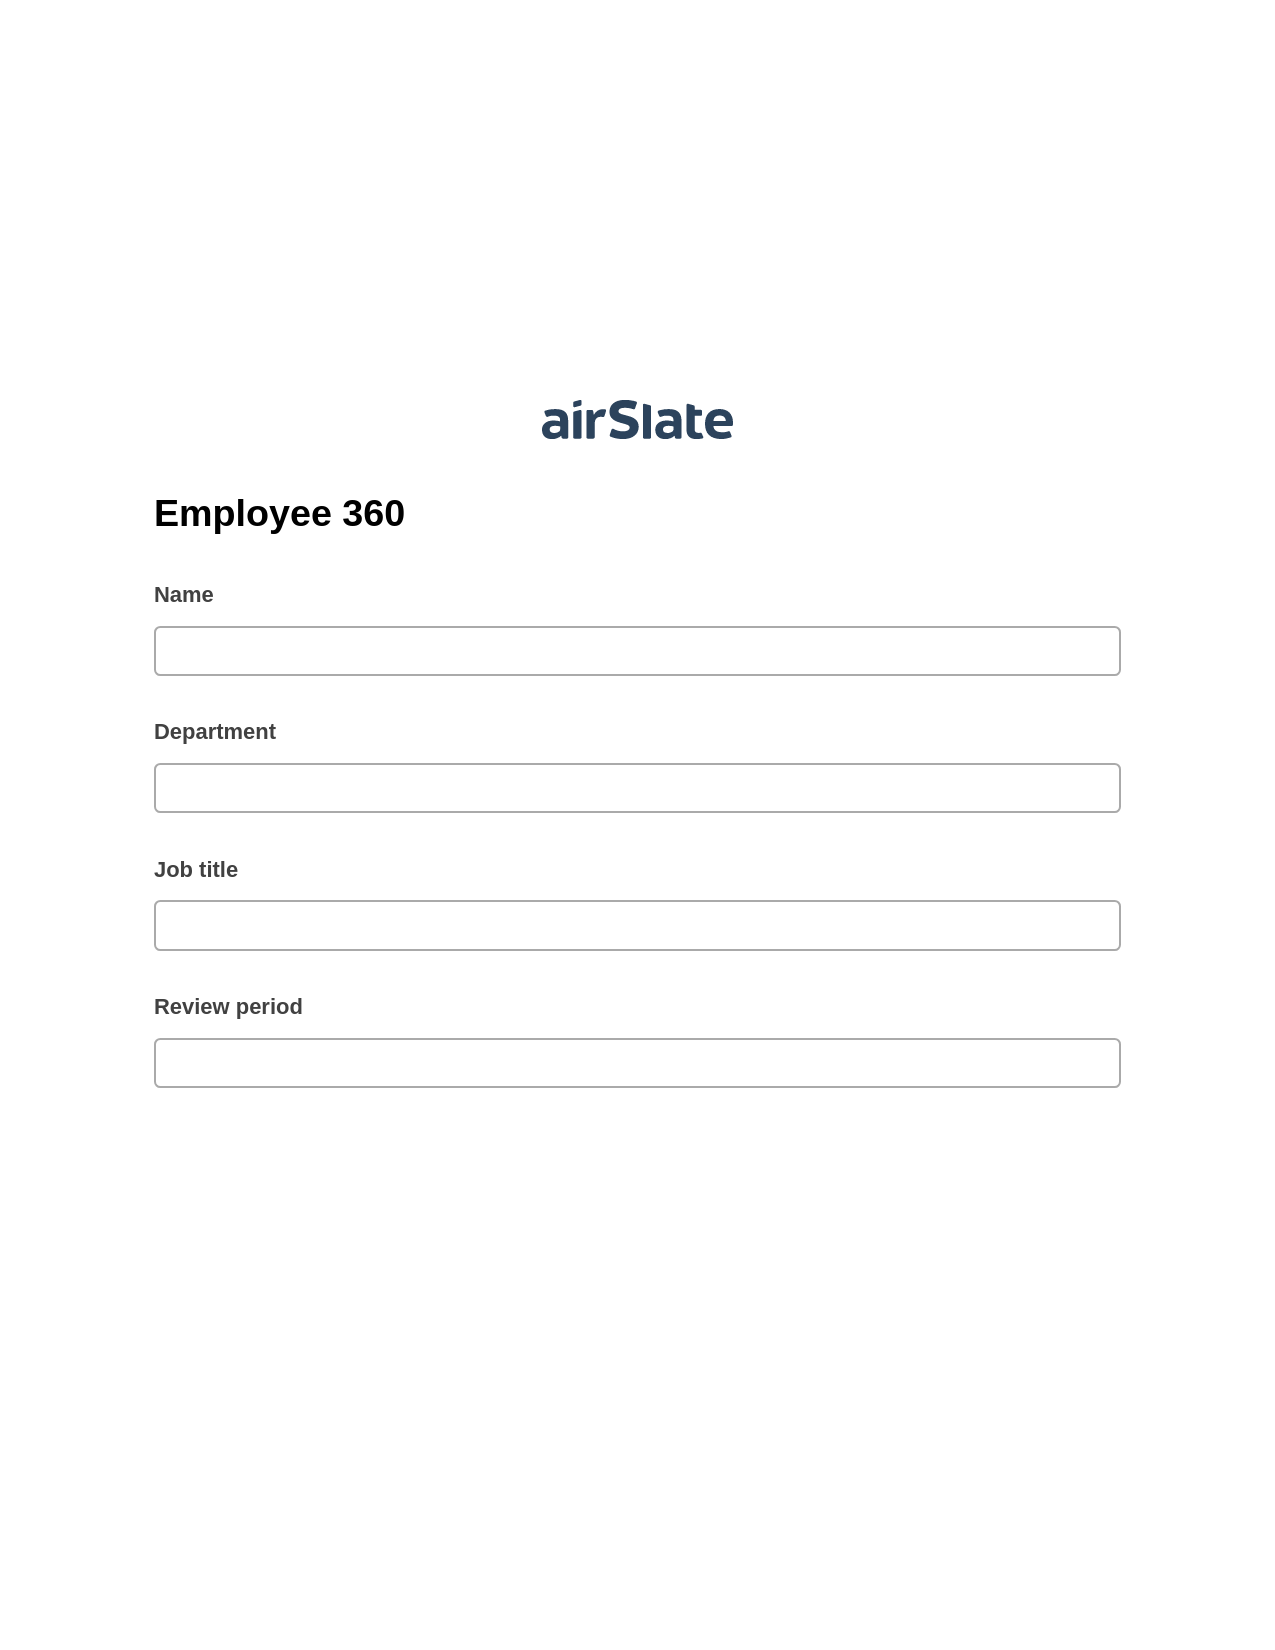 Employee 360 Pre-fill Dropdowns from MySQL Bot, Rename Slate Bot, Export to Smartsheet